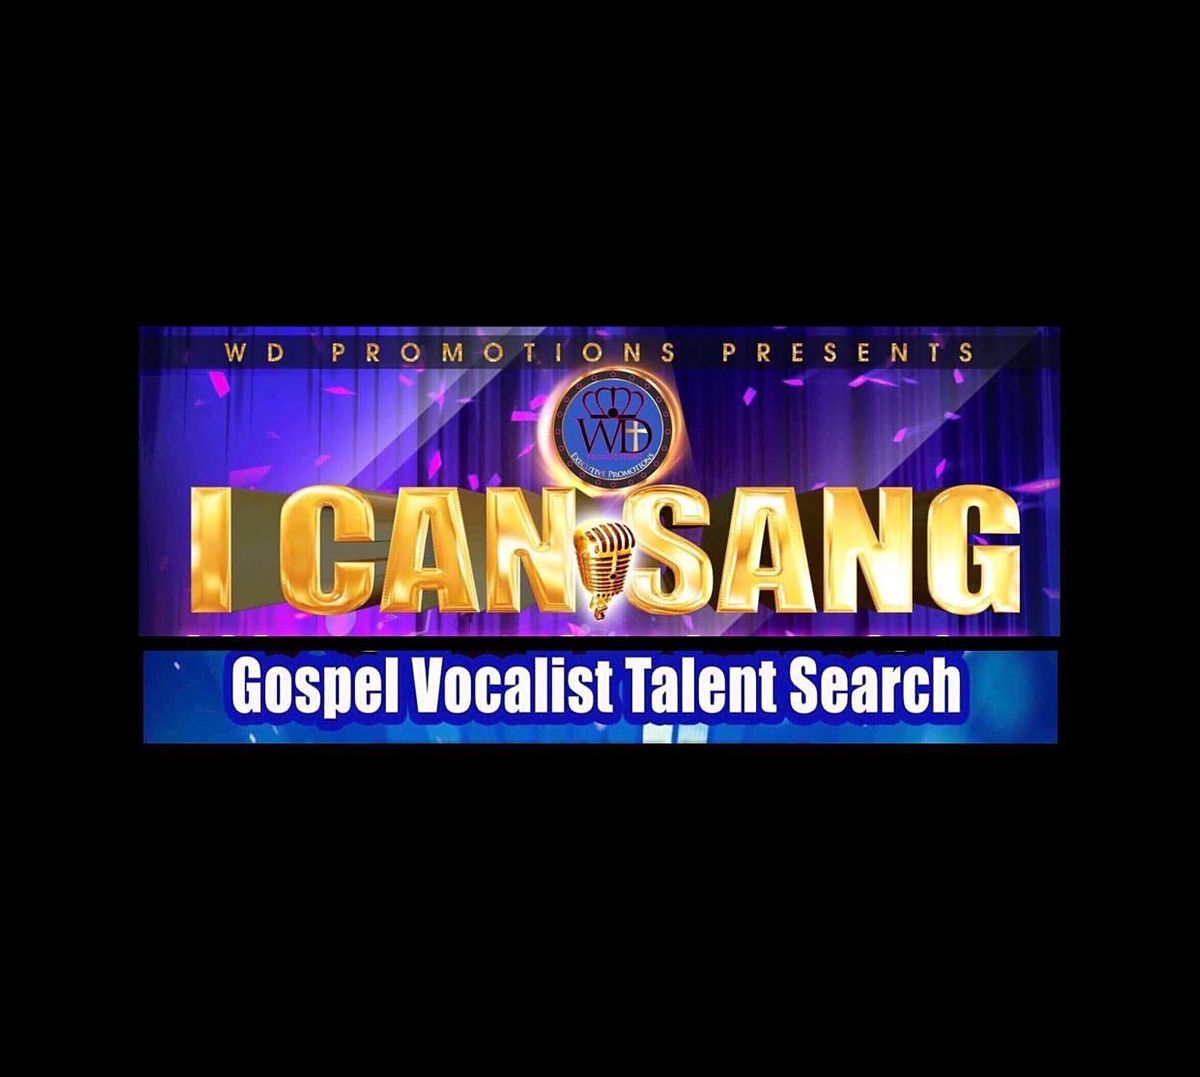 "I CAN SANG" Gospel Vocalist Talent Search 2021